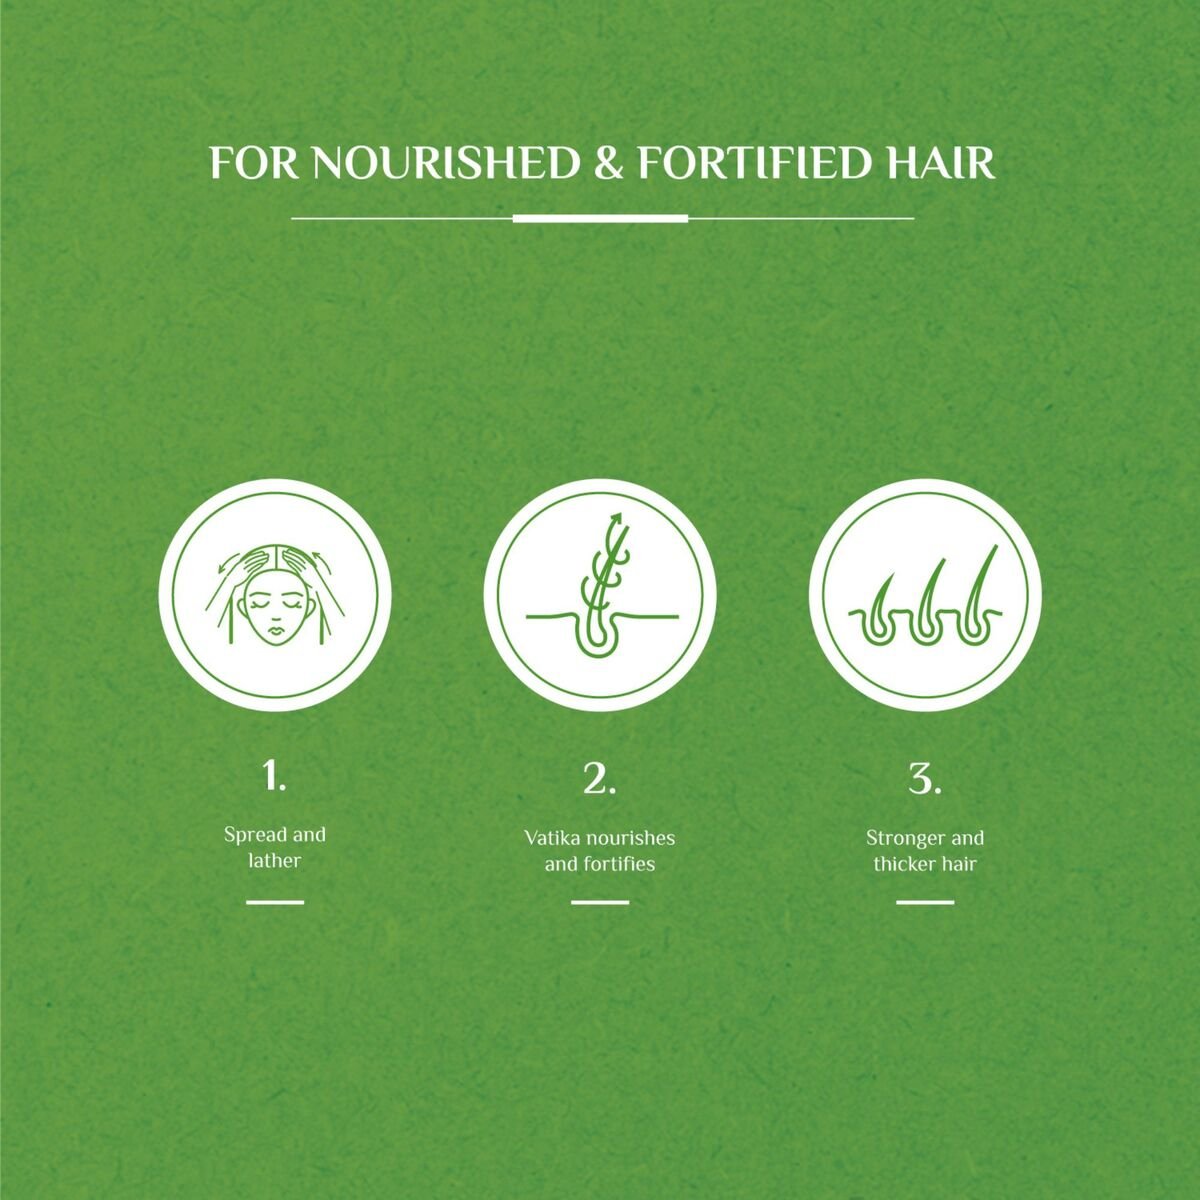 Vatika Naturals Hair Fall Control Shampoo With Nourishing Vatika Oils For Weak, Prone to Hair Fall 700 ml